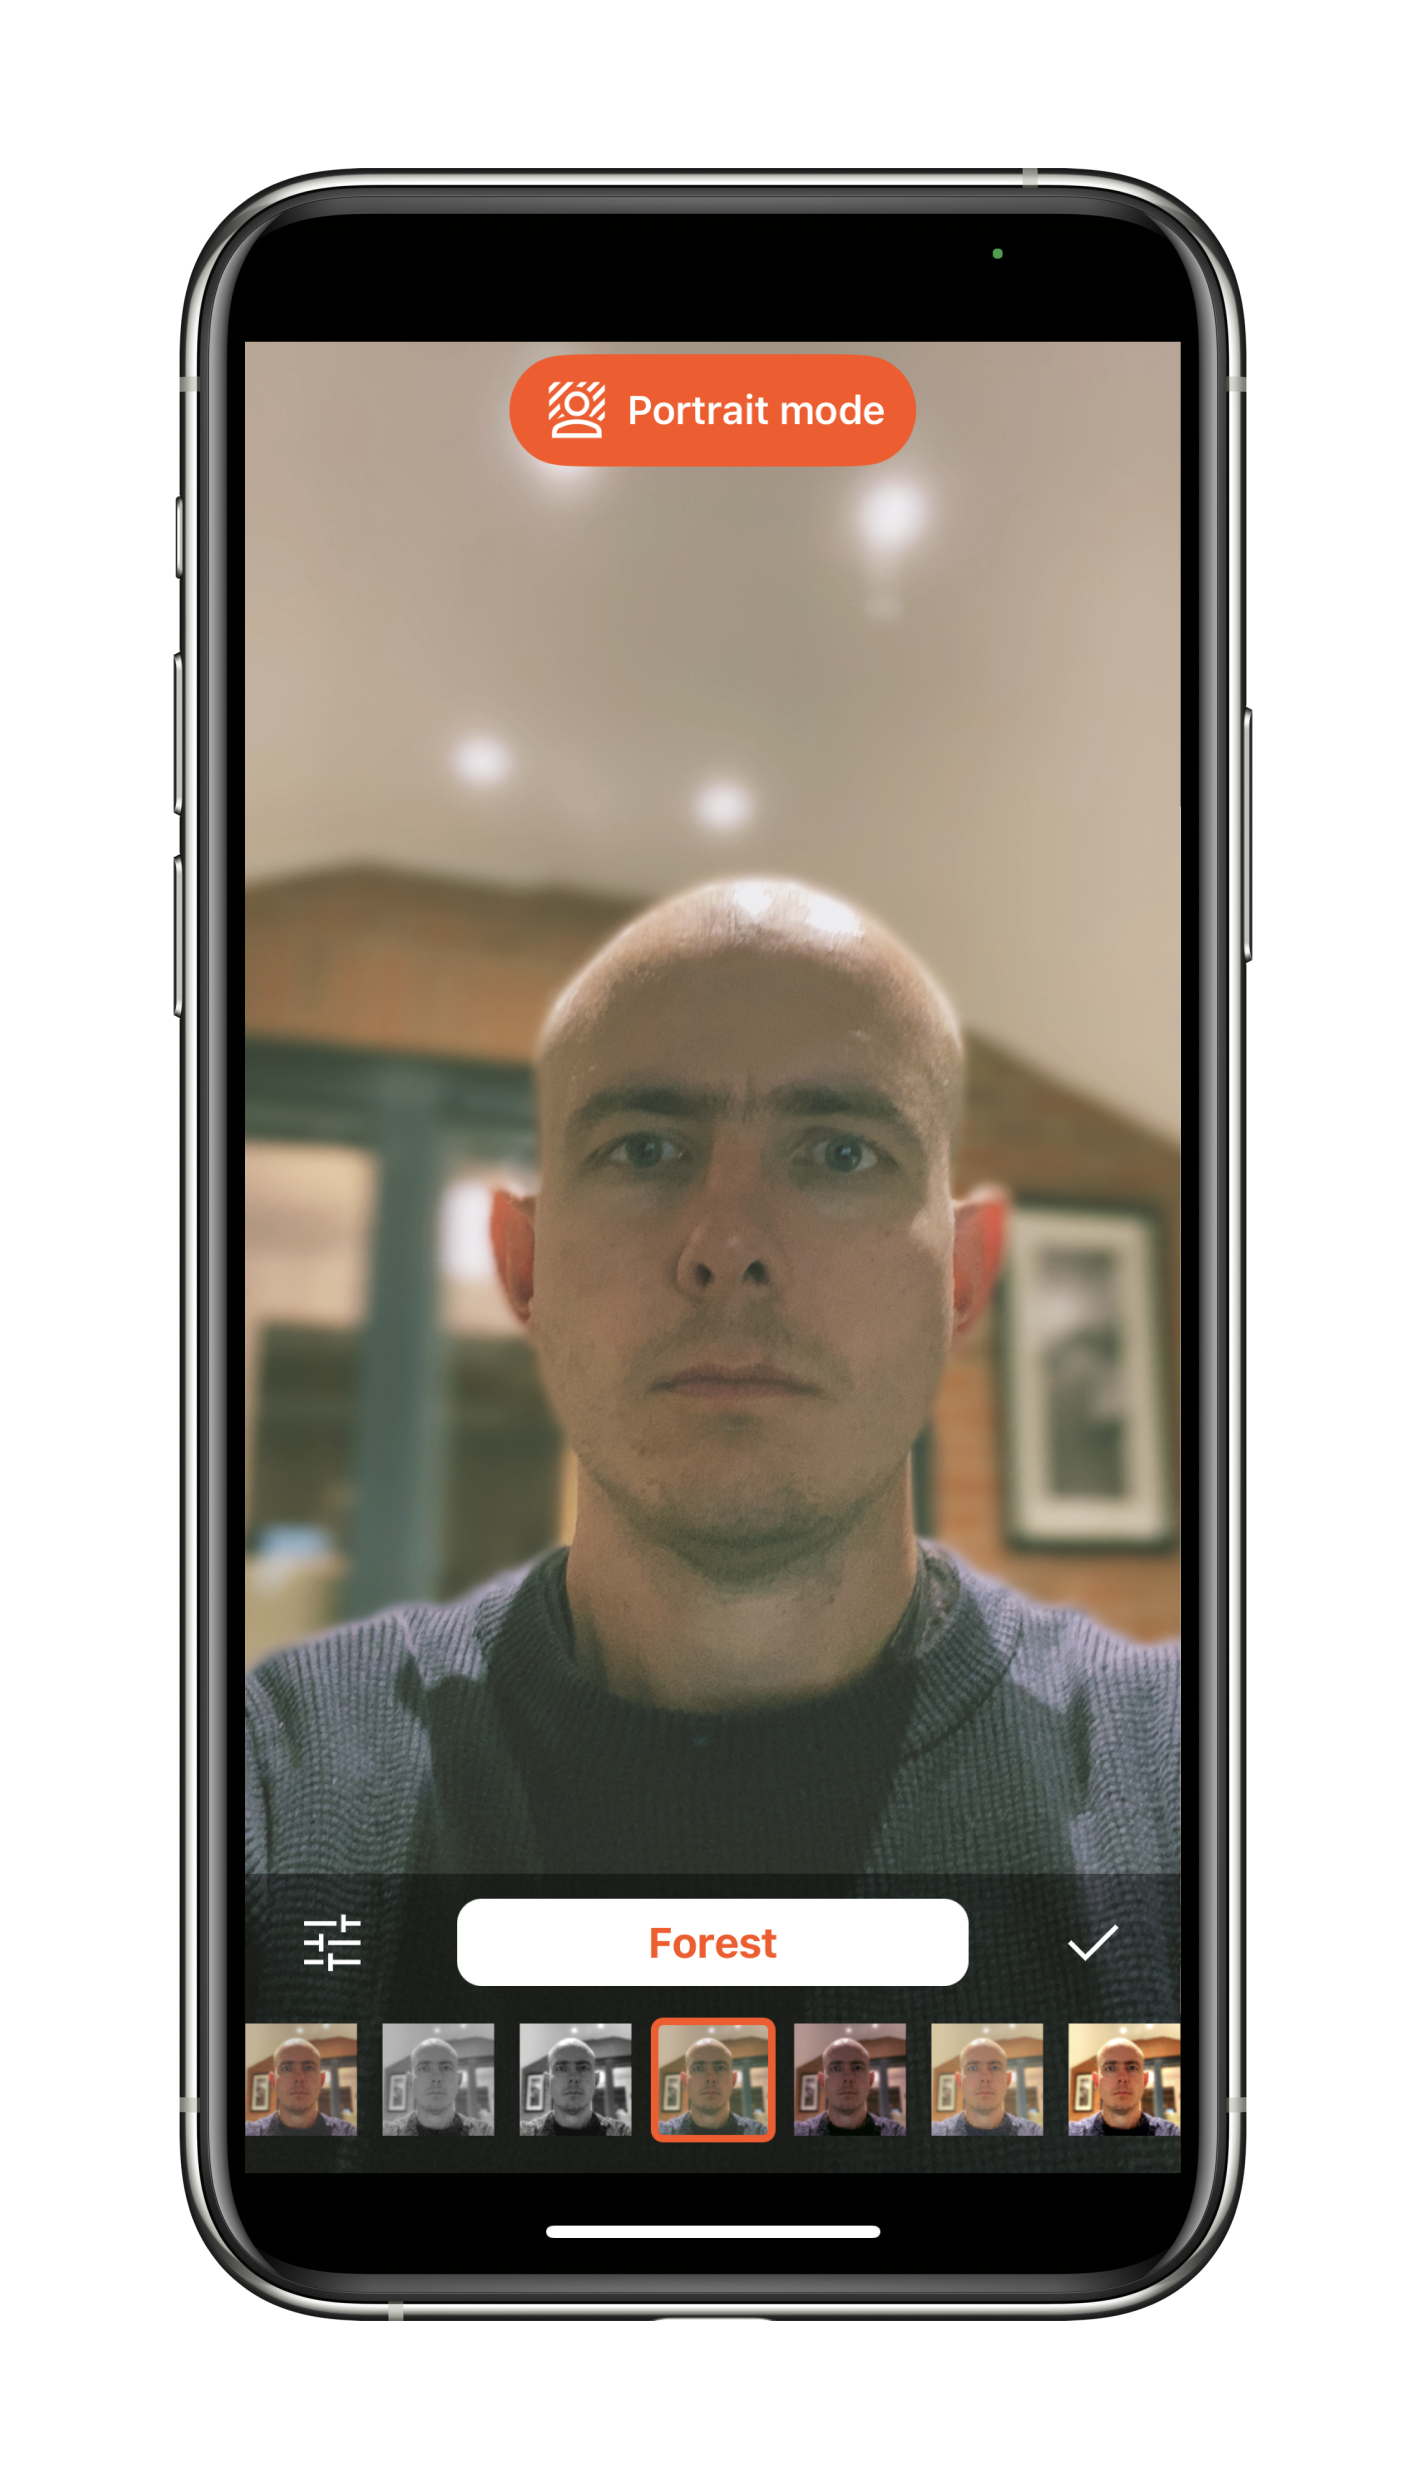 iPhone Portrait Mode Teleprompter app